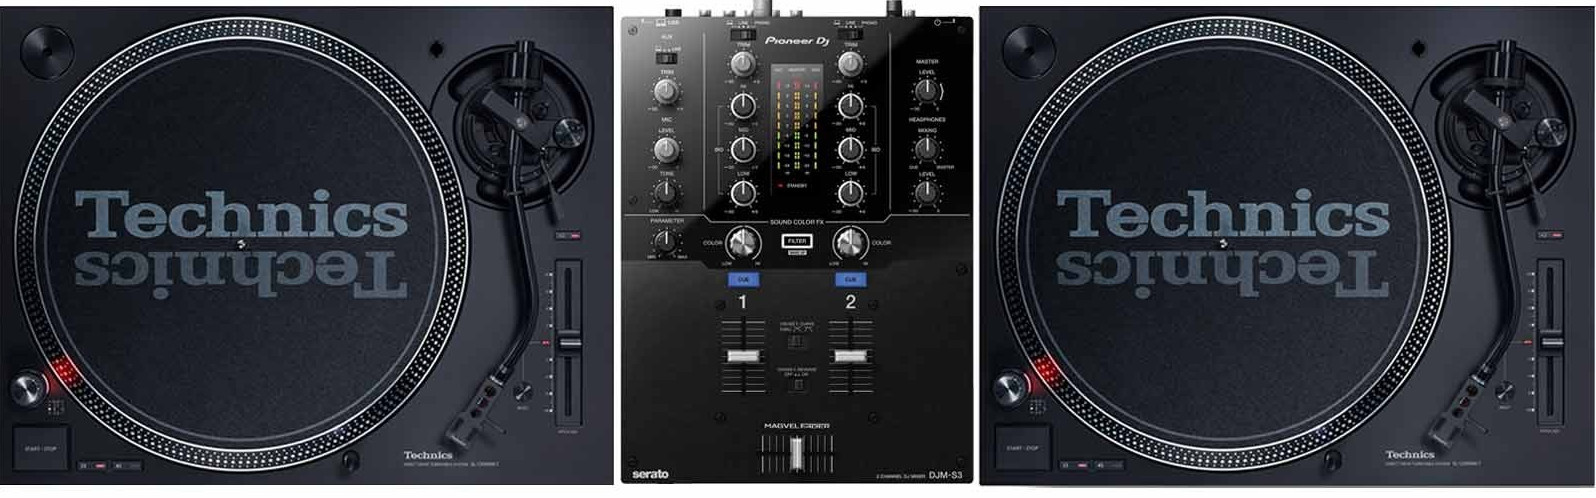 SL-1200MK7 Drive Turntables Pioneer DJM-S3 Mixer